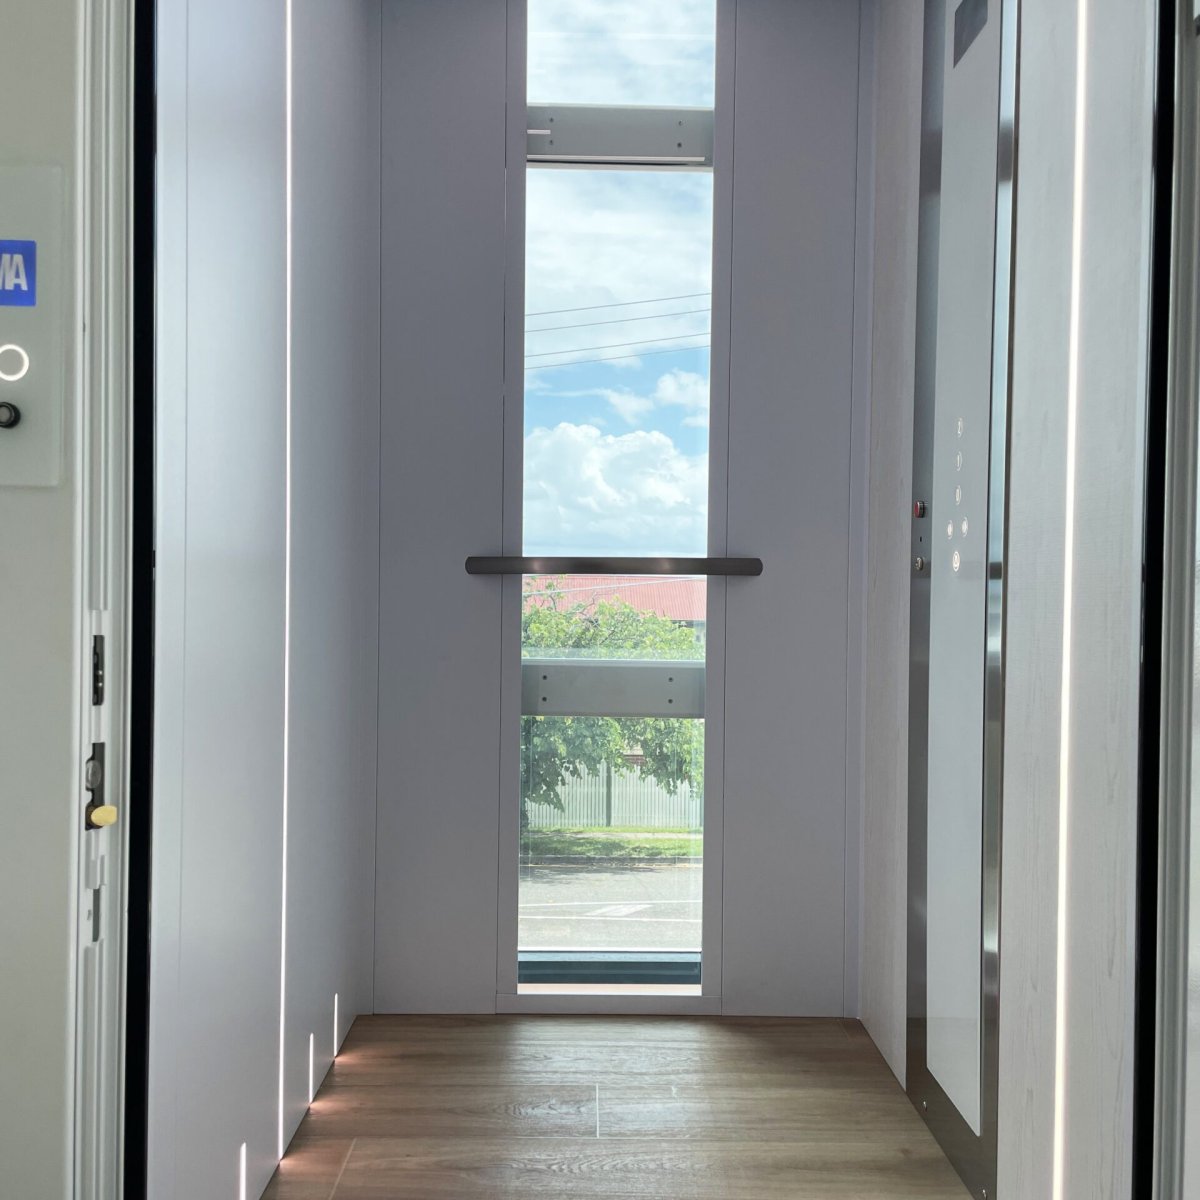  The Elite Home Lift | Simplex Elevators Gallery Image 4